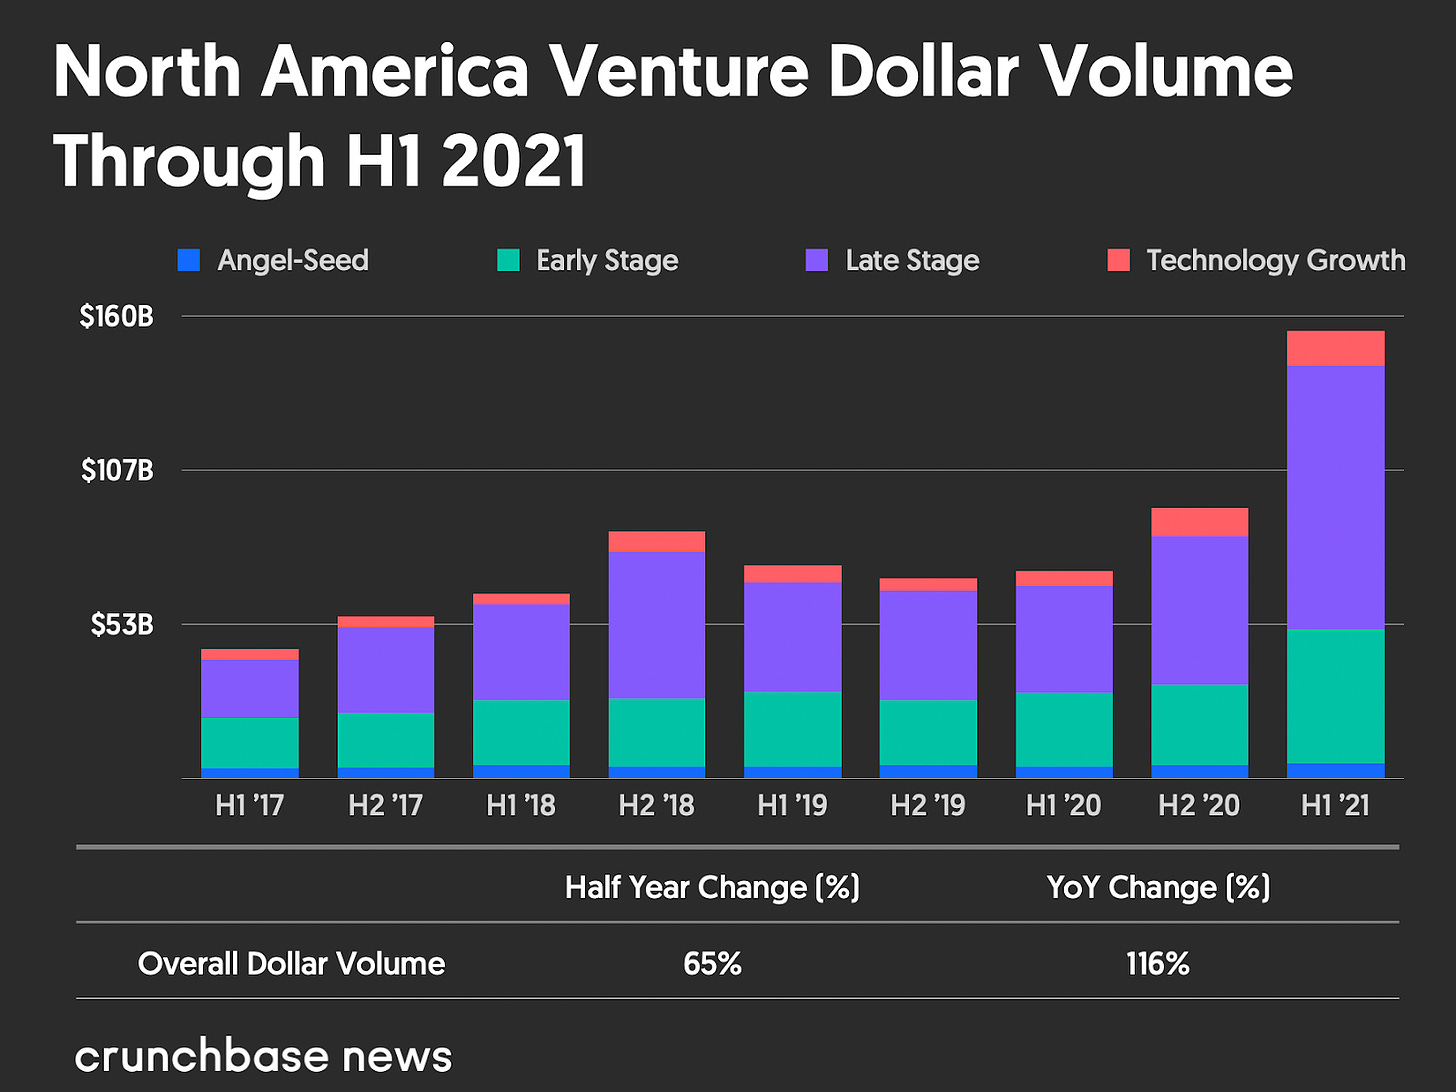 North American Venture Dollar Volume by Stage